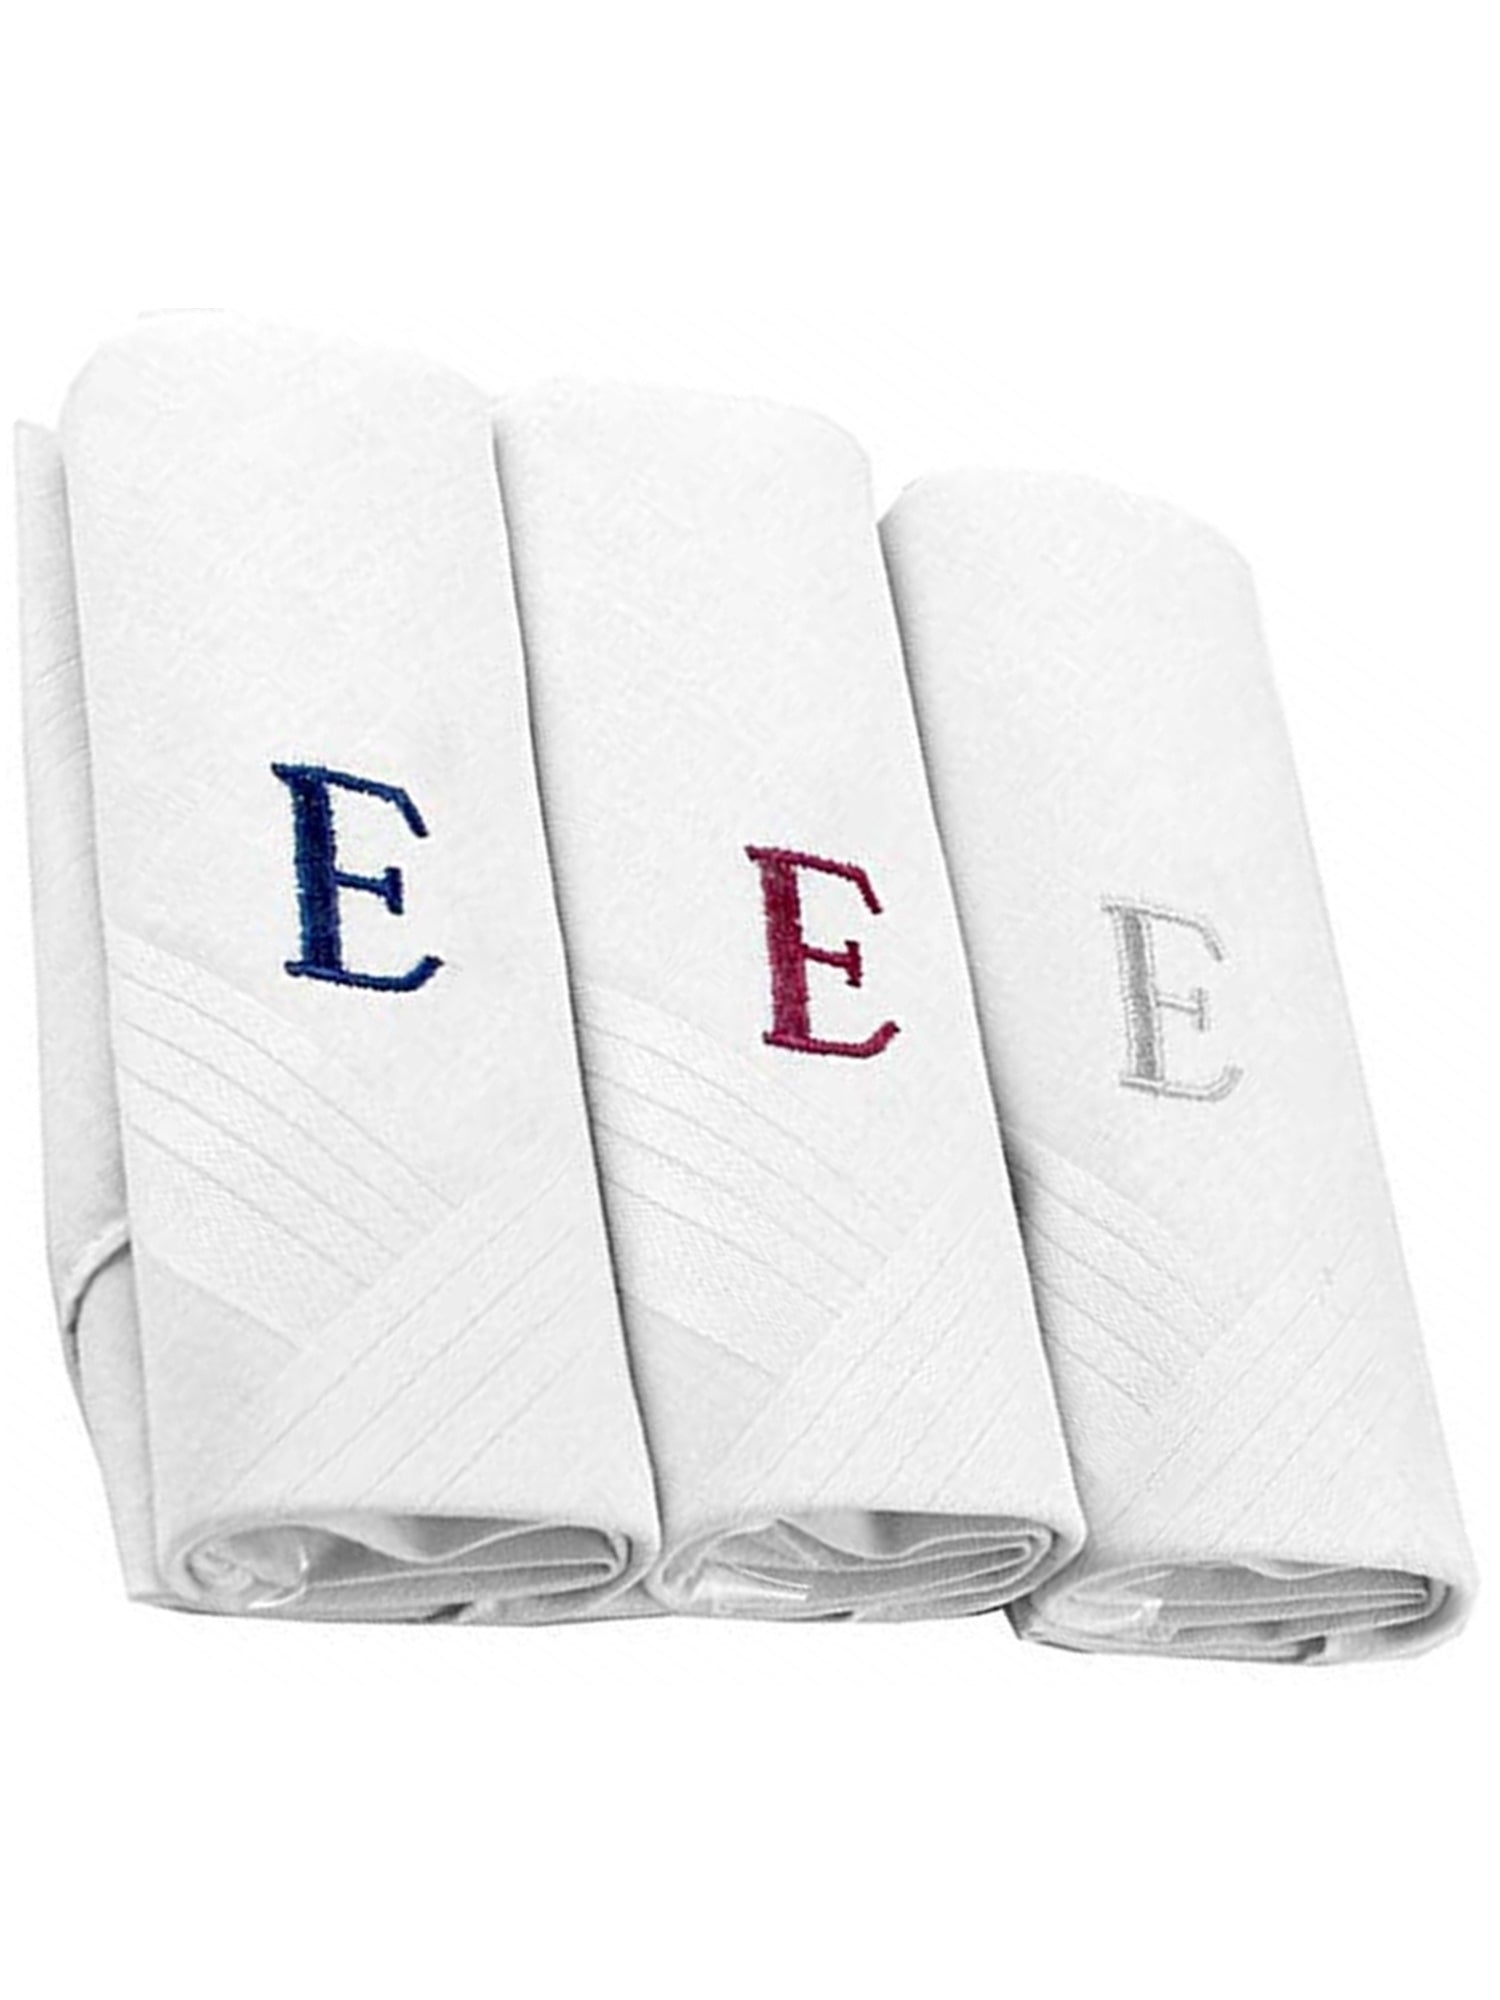 Men's Cotton Monogrammed Handkerchiefs Initial Letter Hanky Handkerchiefs TheDapperTie White E 2 x 3 Pack  